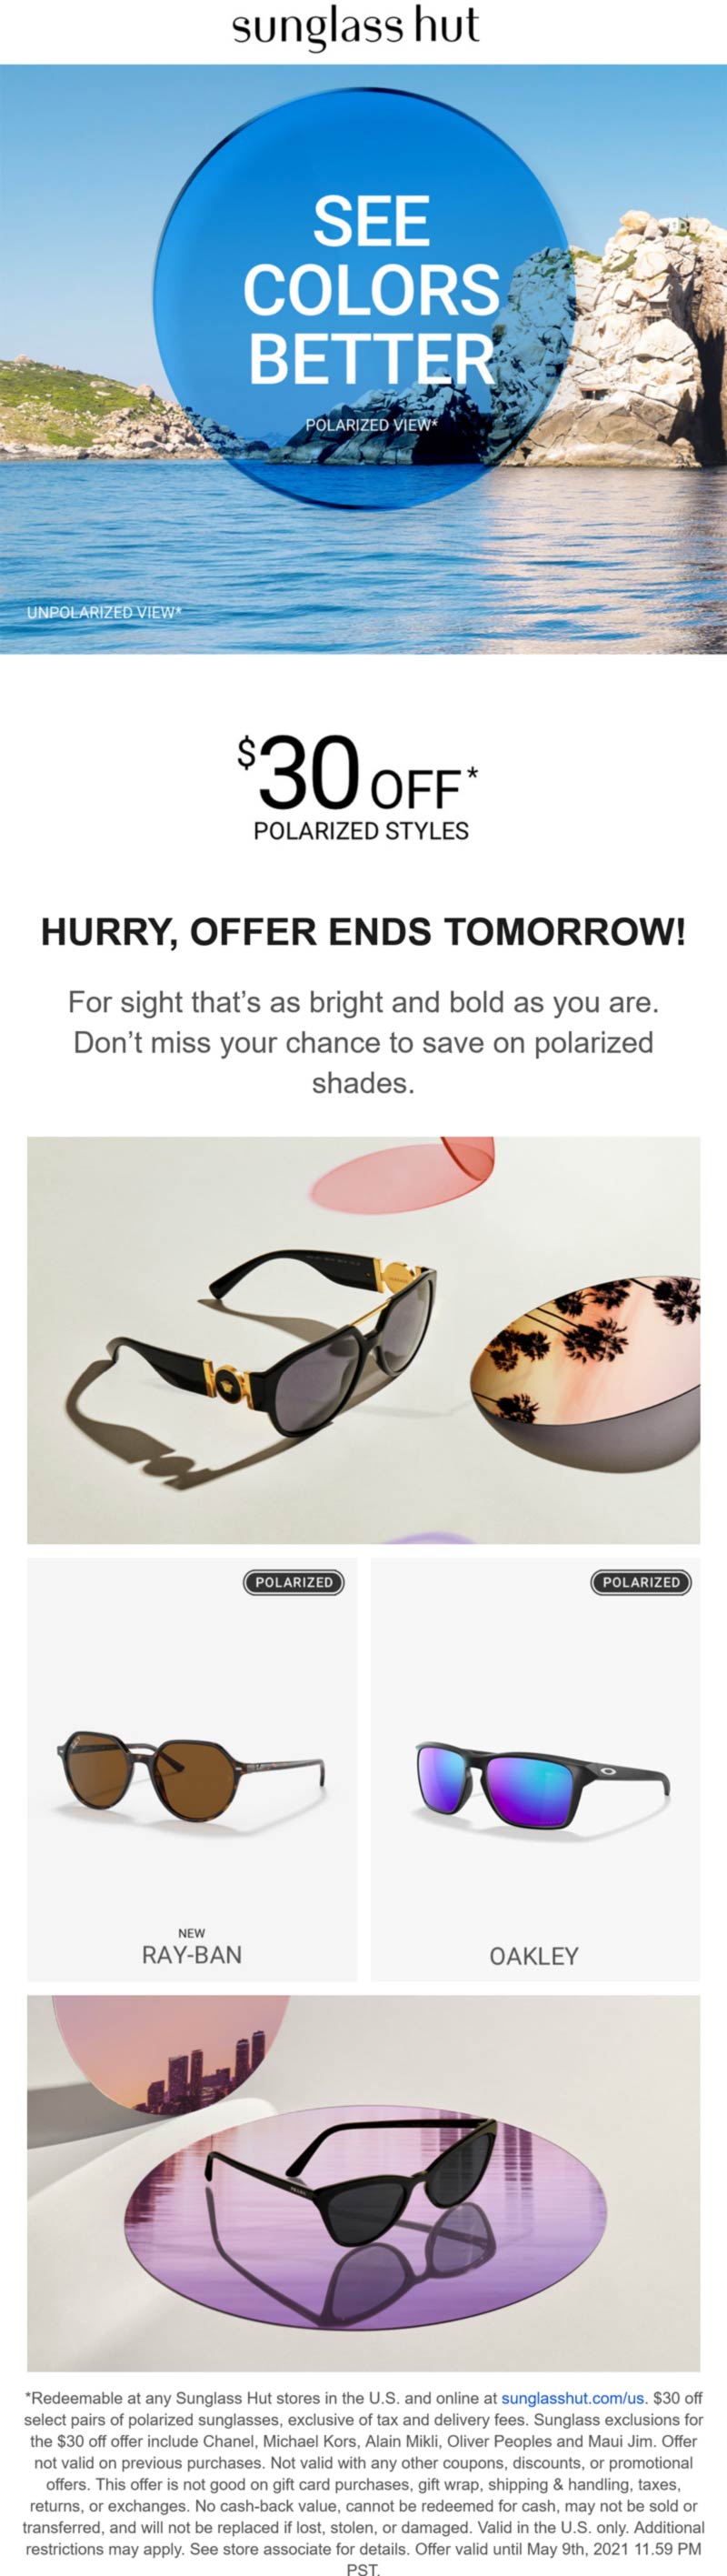 Sunglass Hut stores Coupon  $30 off polarized styles at Sunglass Hut, ditto online #sunglasshut 